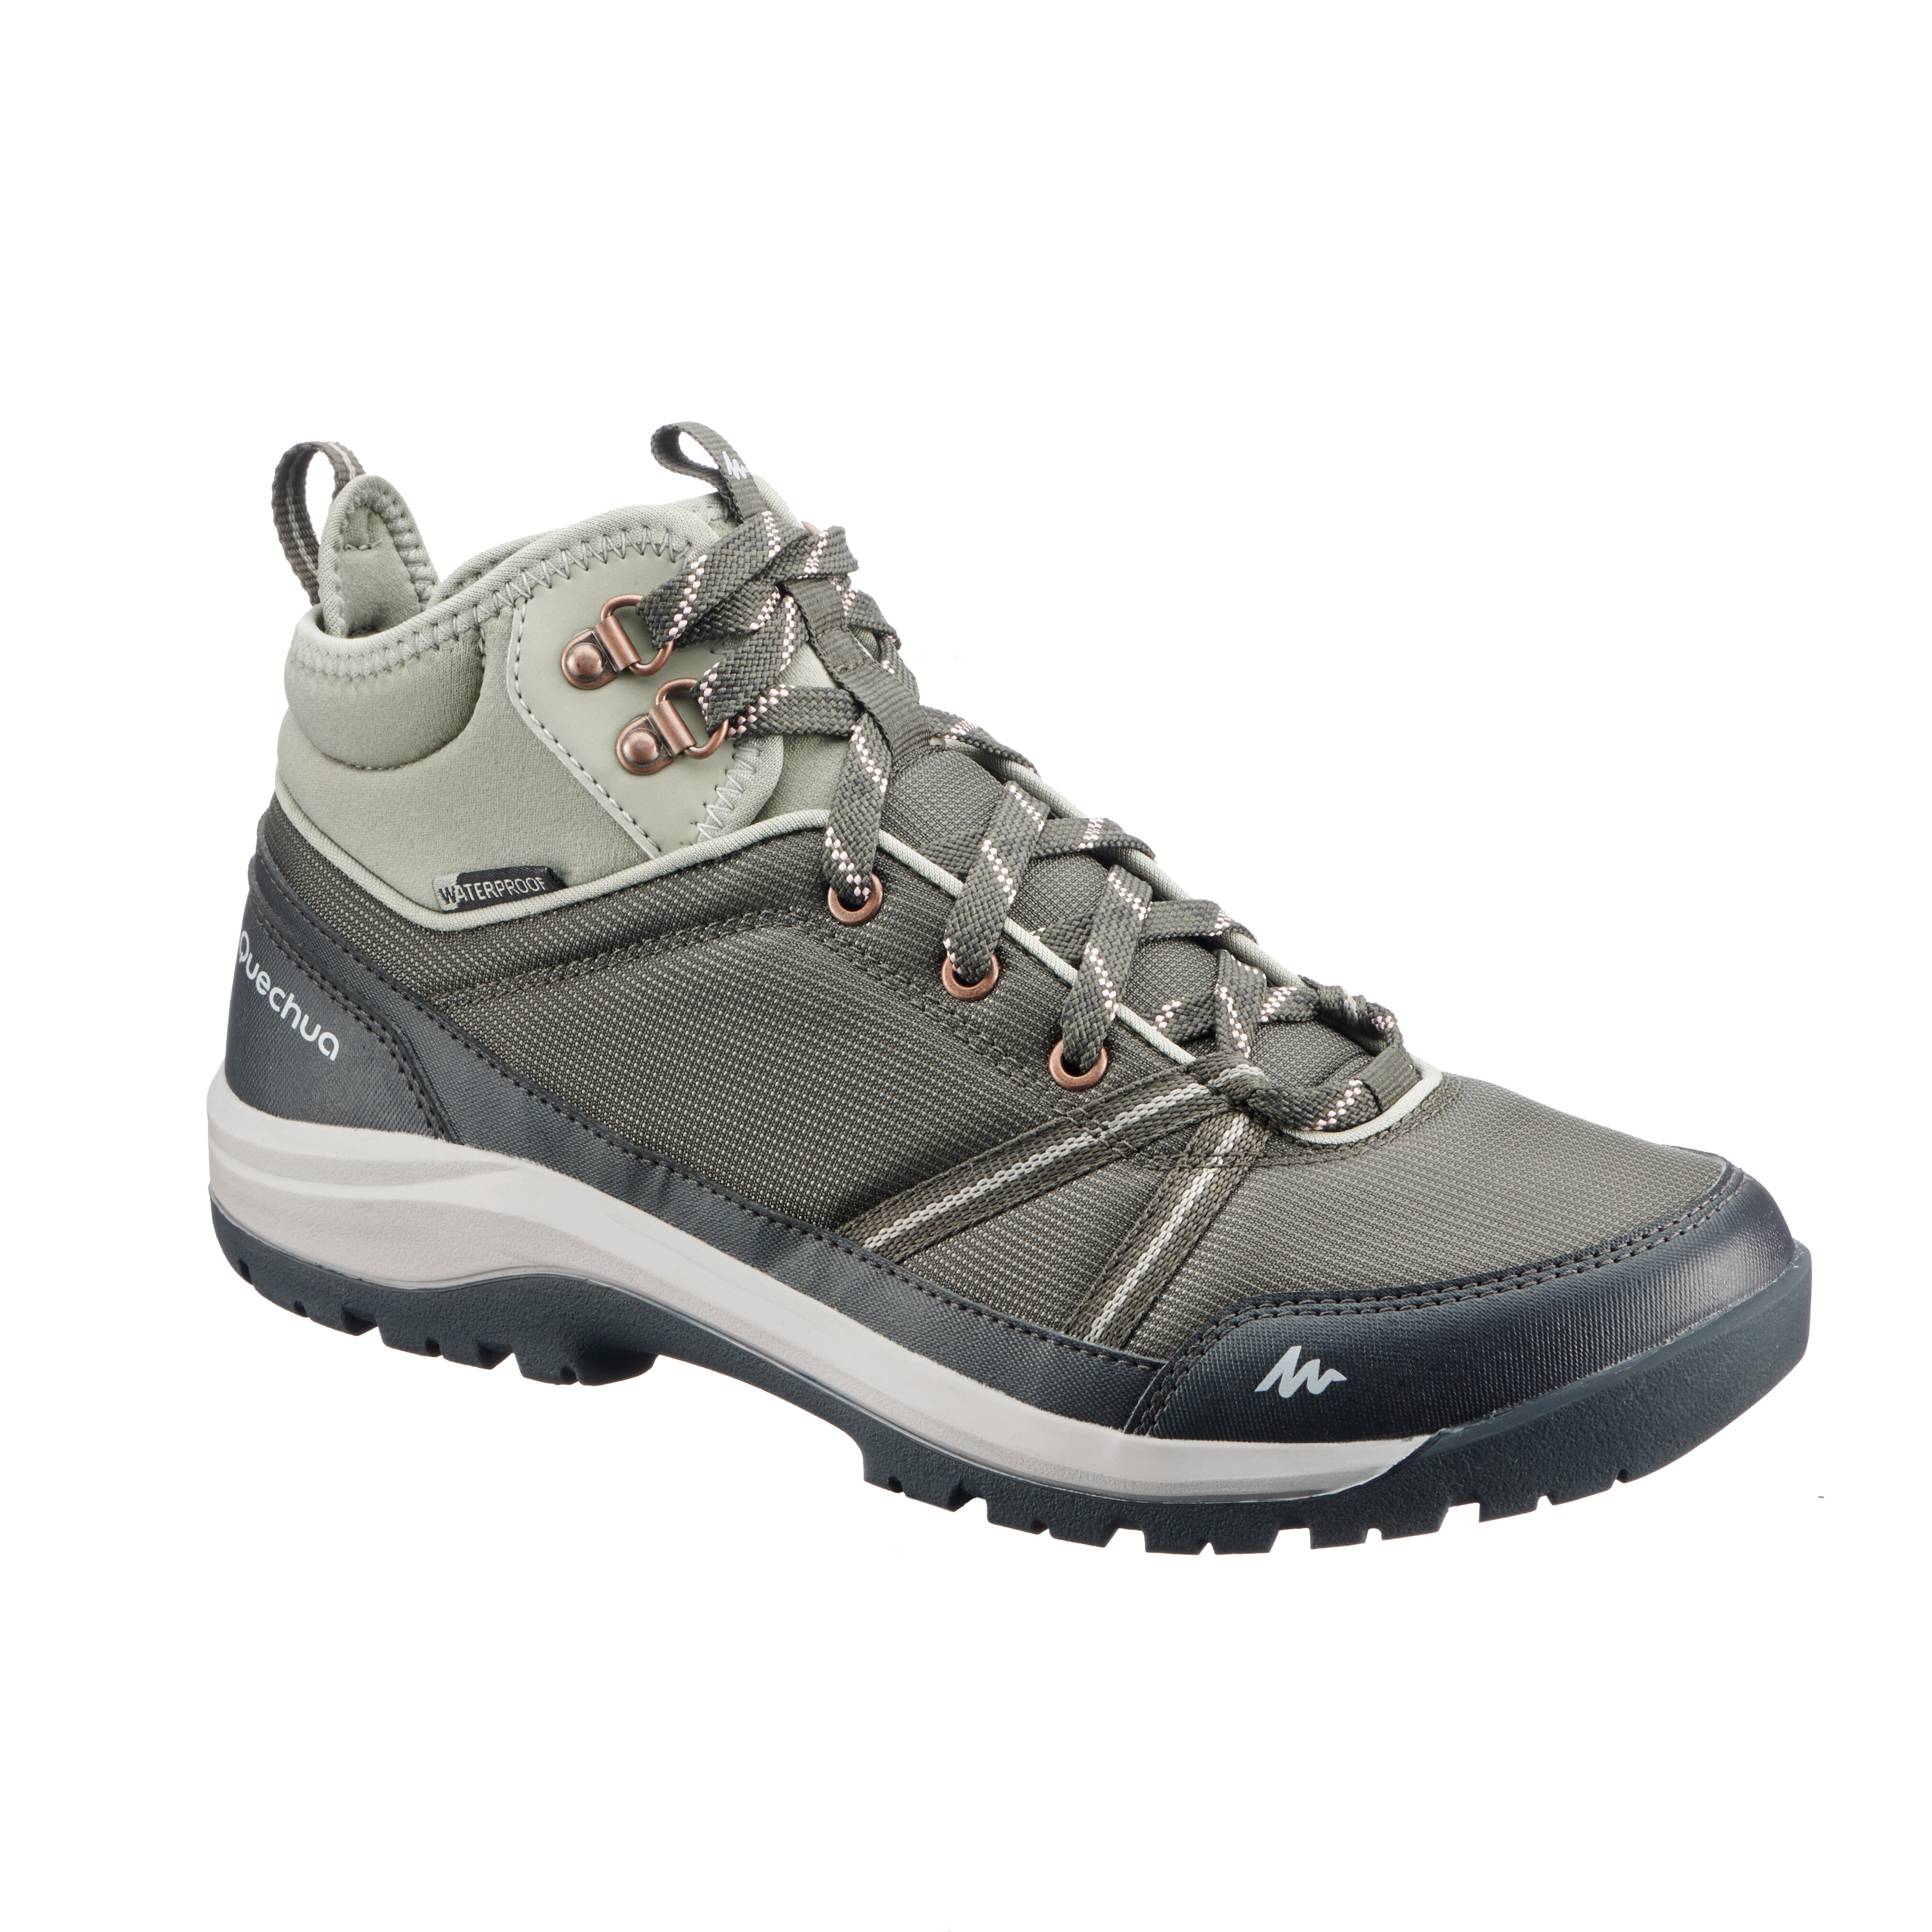 Buy Women’s Waterproof Hiking Boots NH150 Mid WP Online | Decathlon